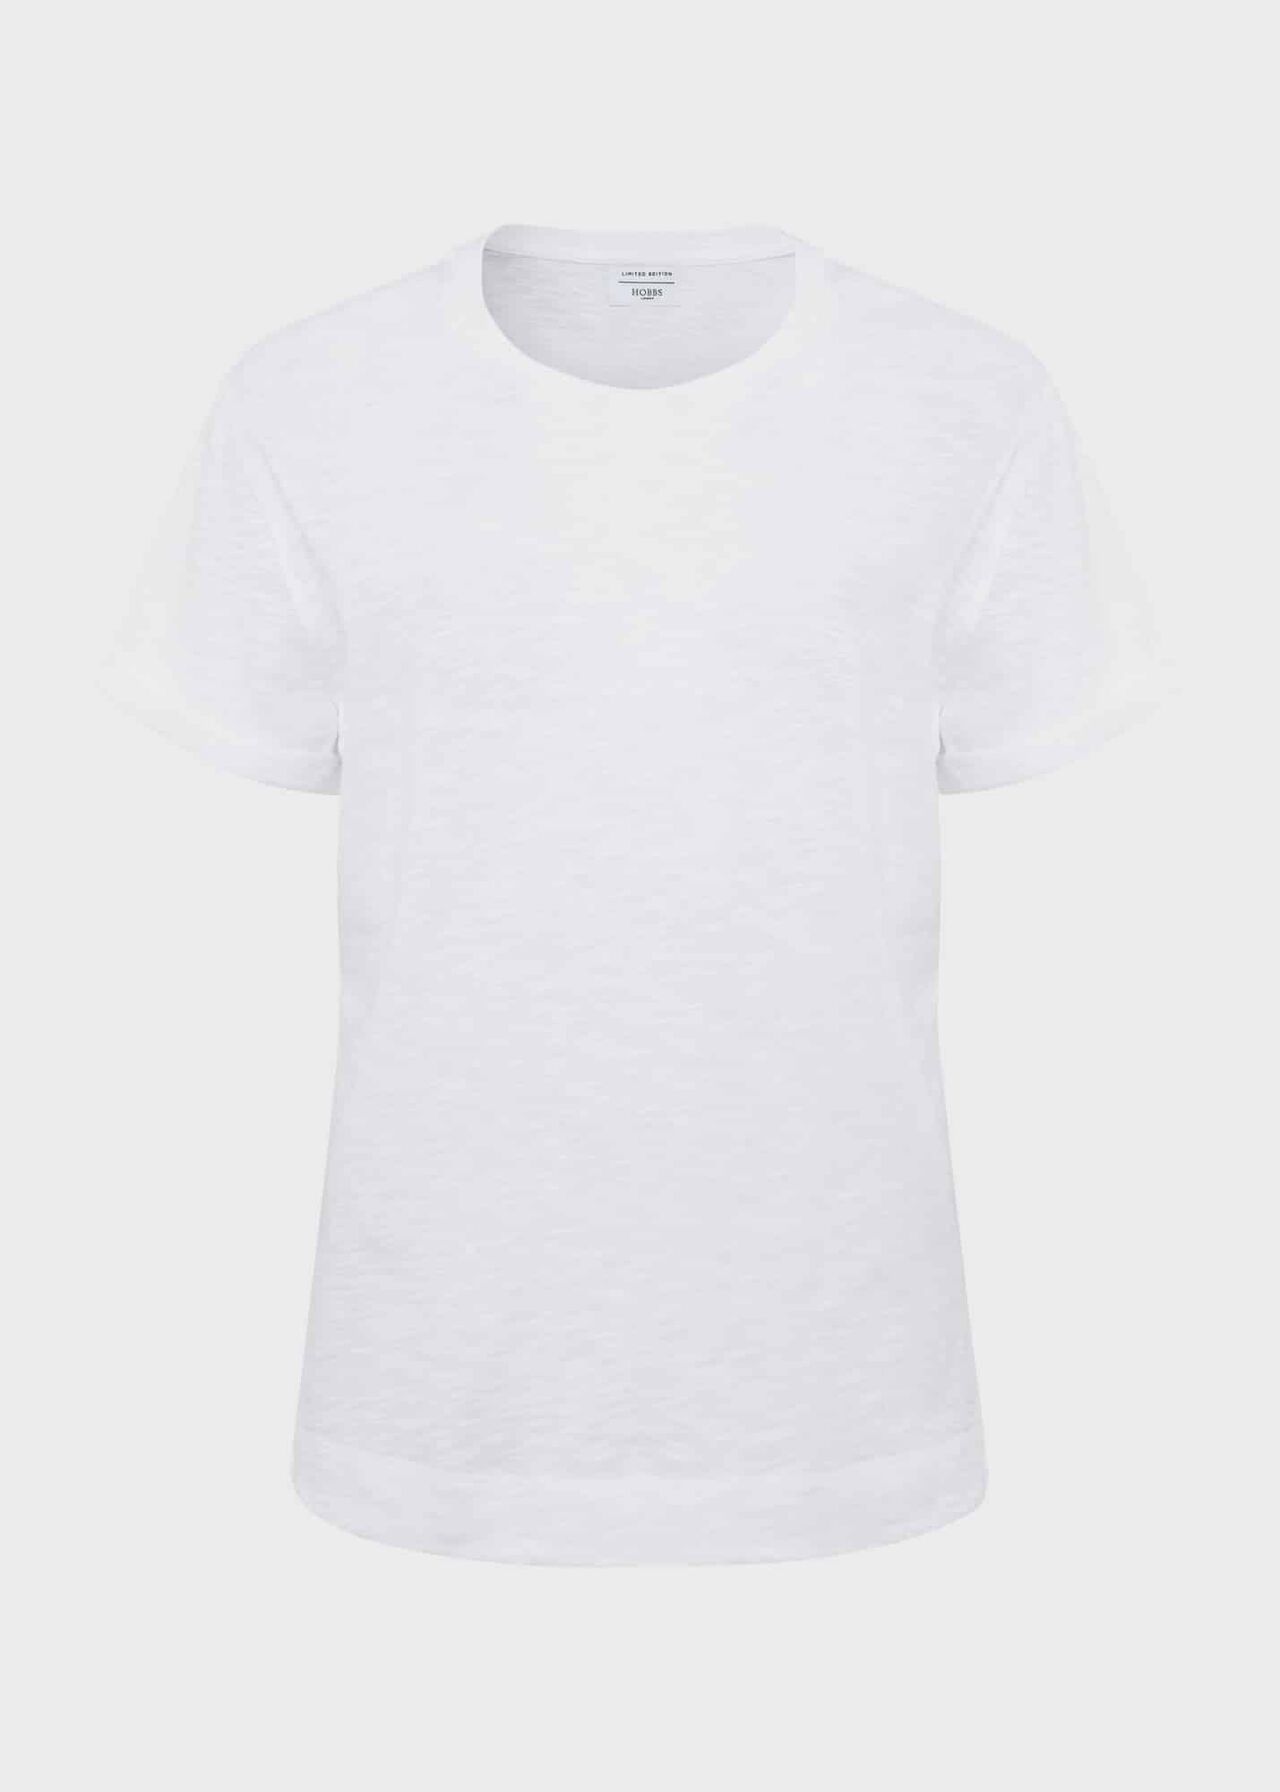 Arundell T-Shirt, White, hi-res